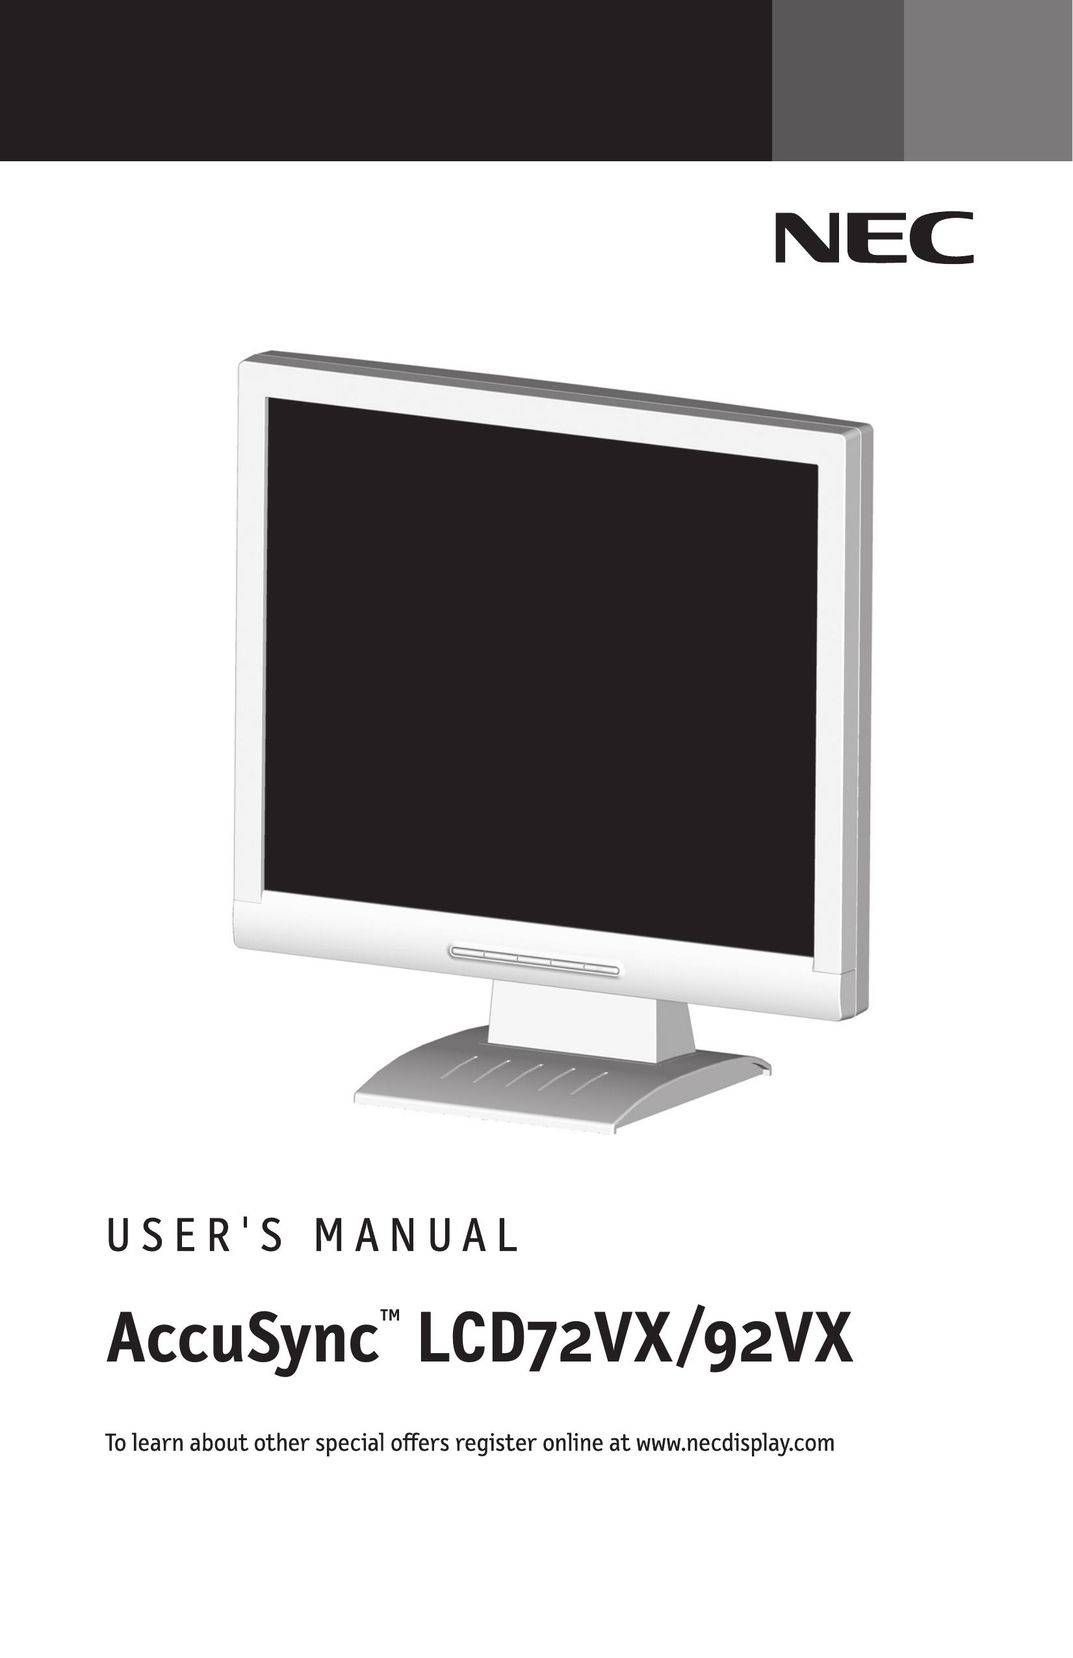 NEC 92VX Computer Monitor User Manual